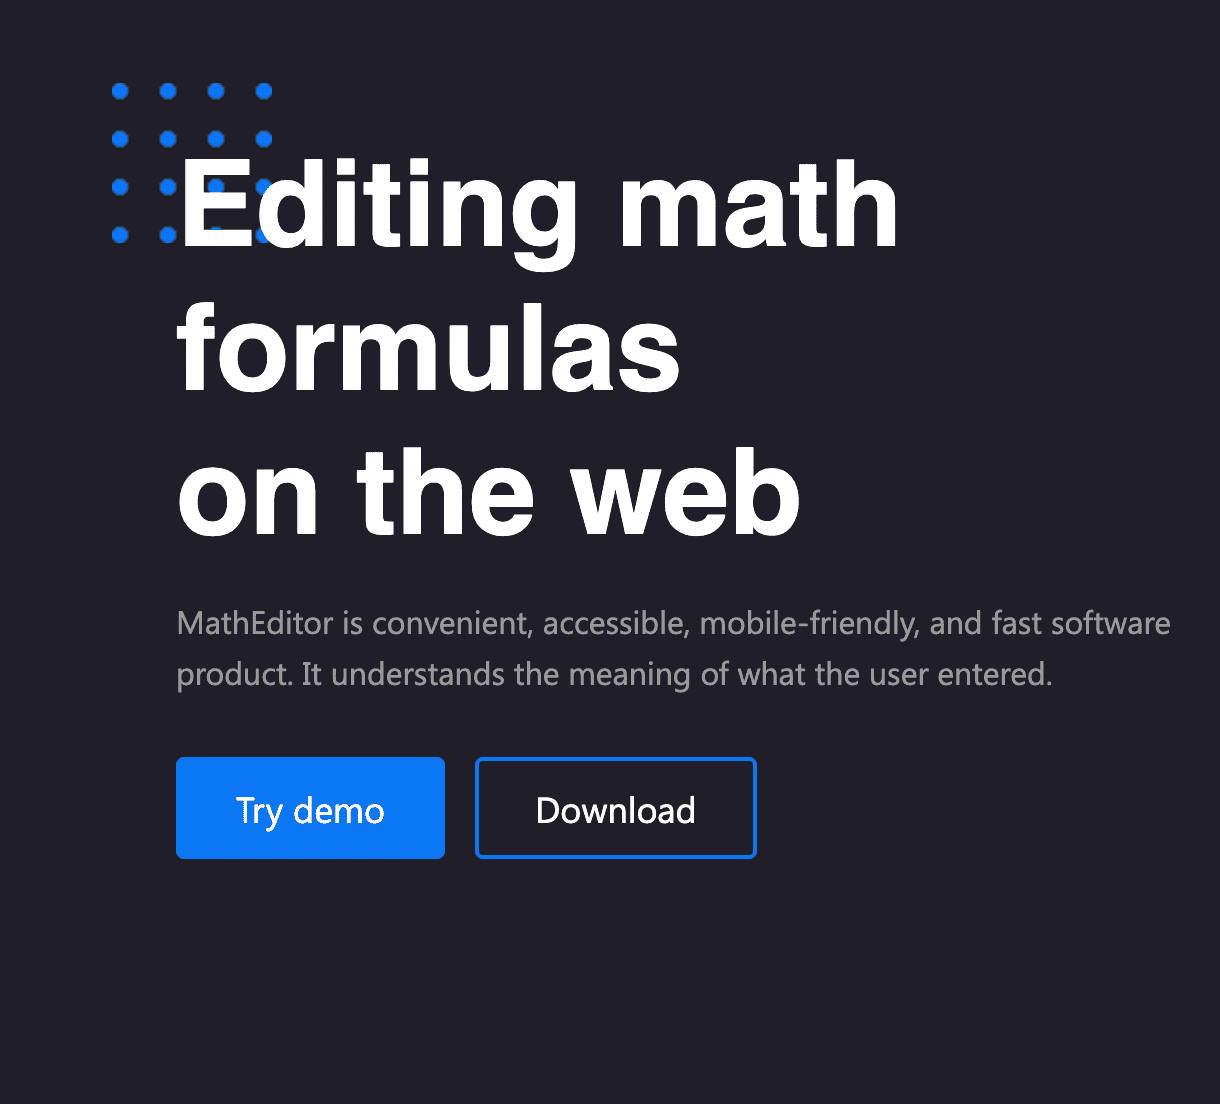 UseCase: Edit Math Formulas